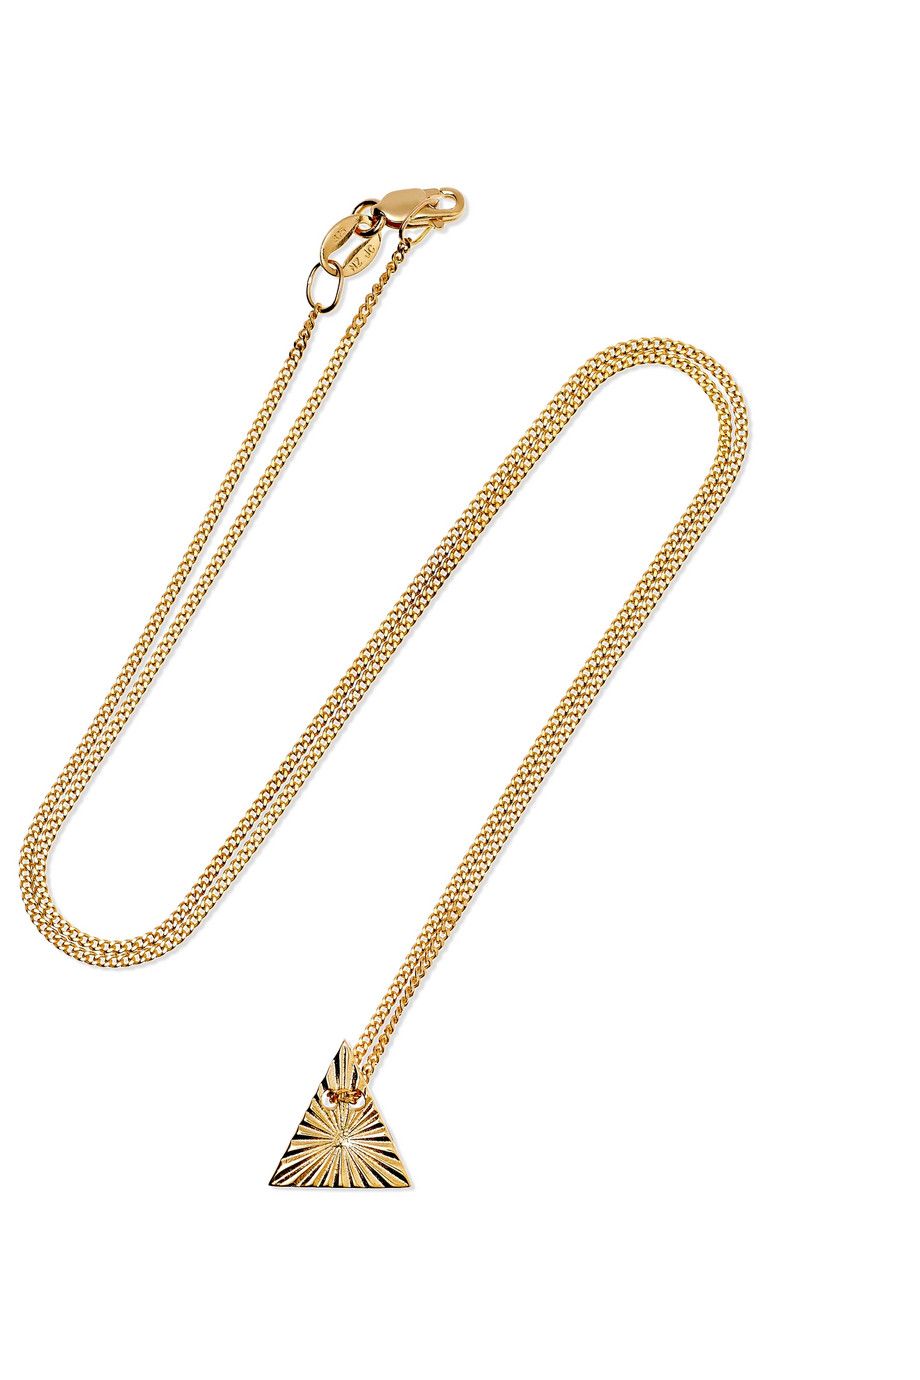 Aether Element 9-karat gold necklace